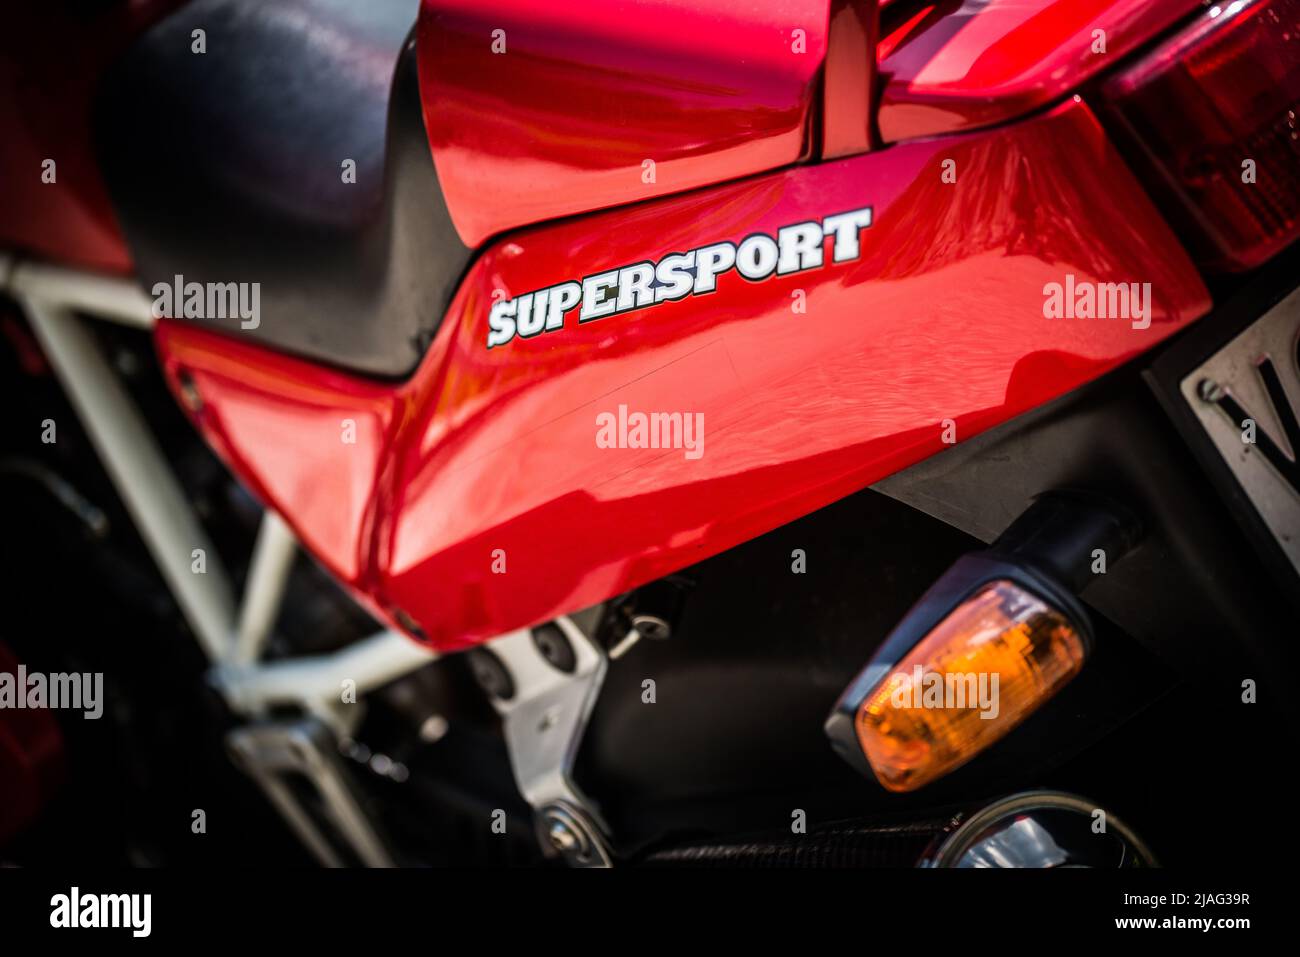 Ducati 900 Supersport Stock Photo